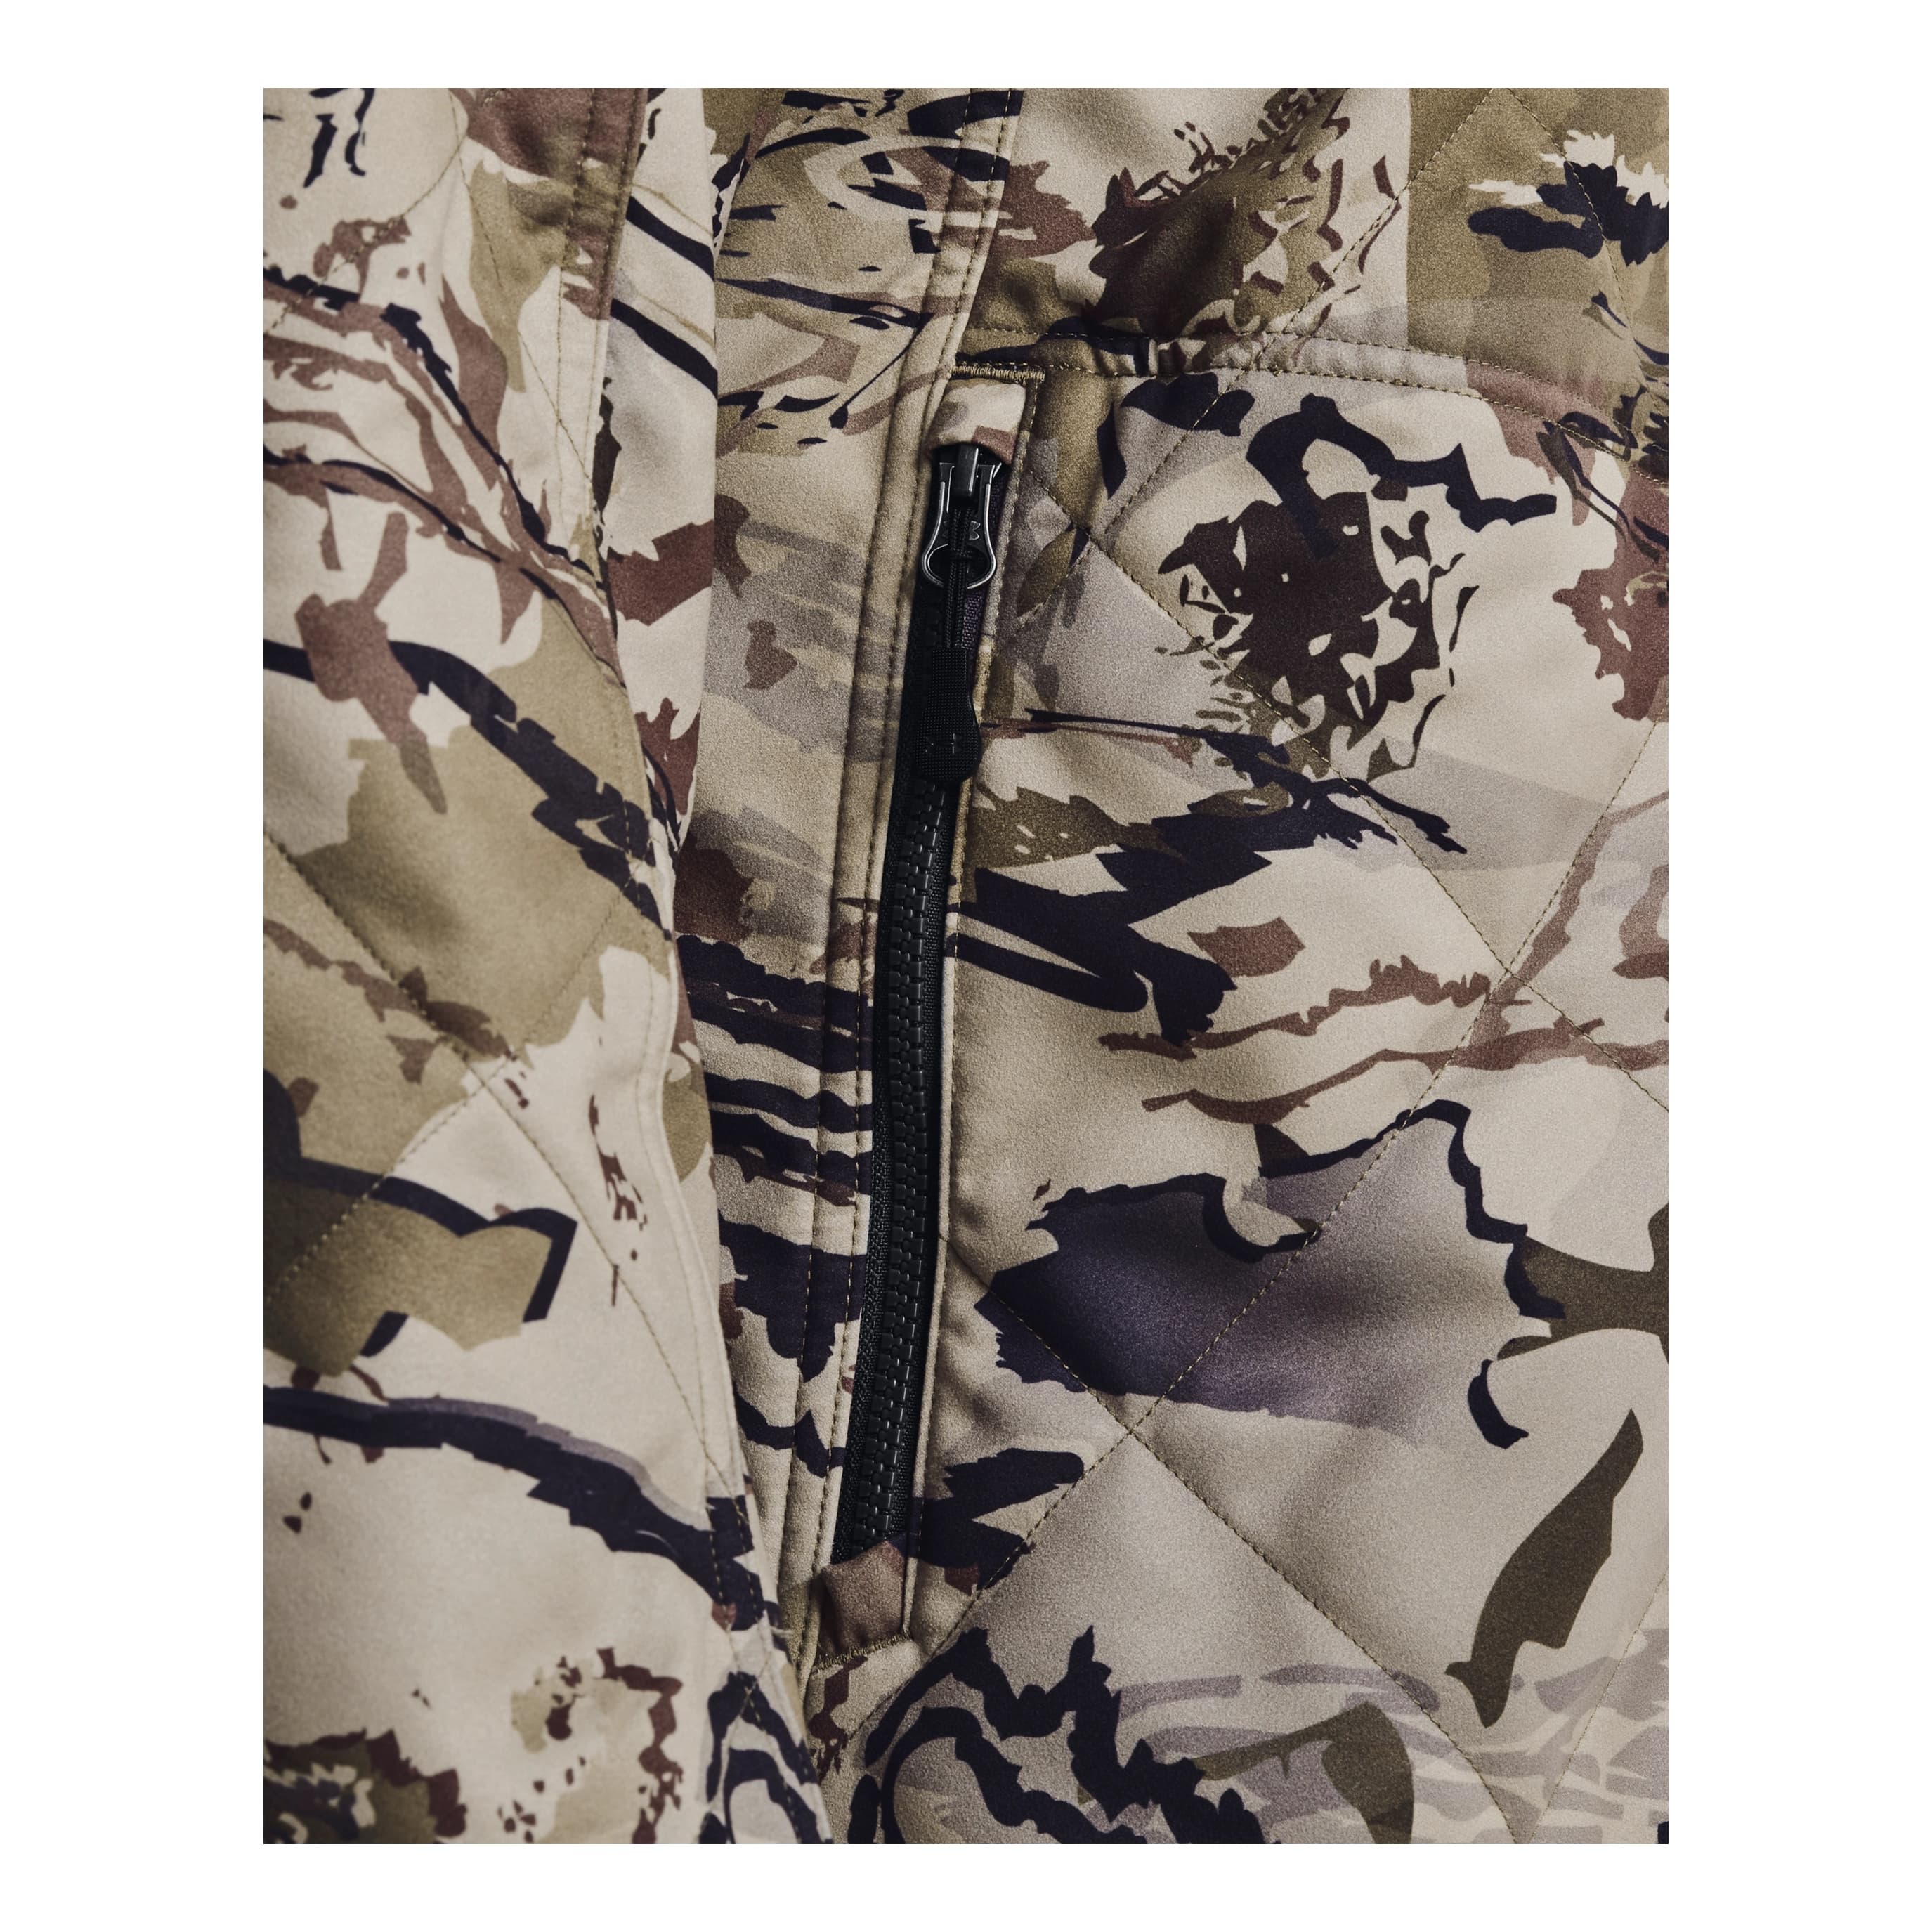 Under Armour® Men’s Brow Tine ColdGear® Infrared Jacket - Barren Camo